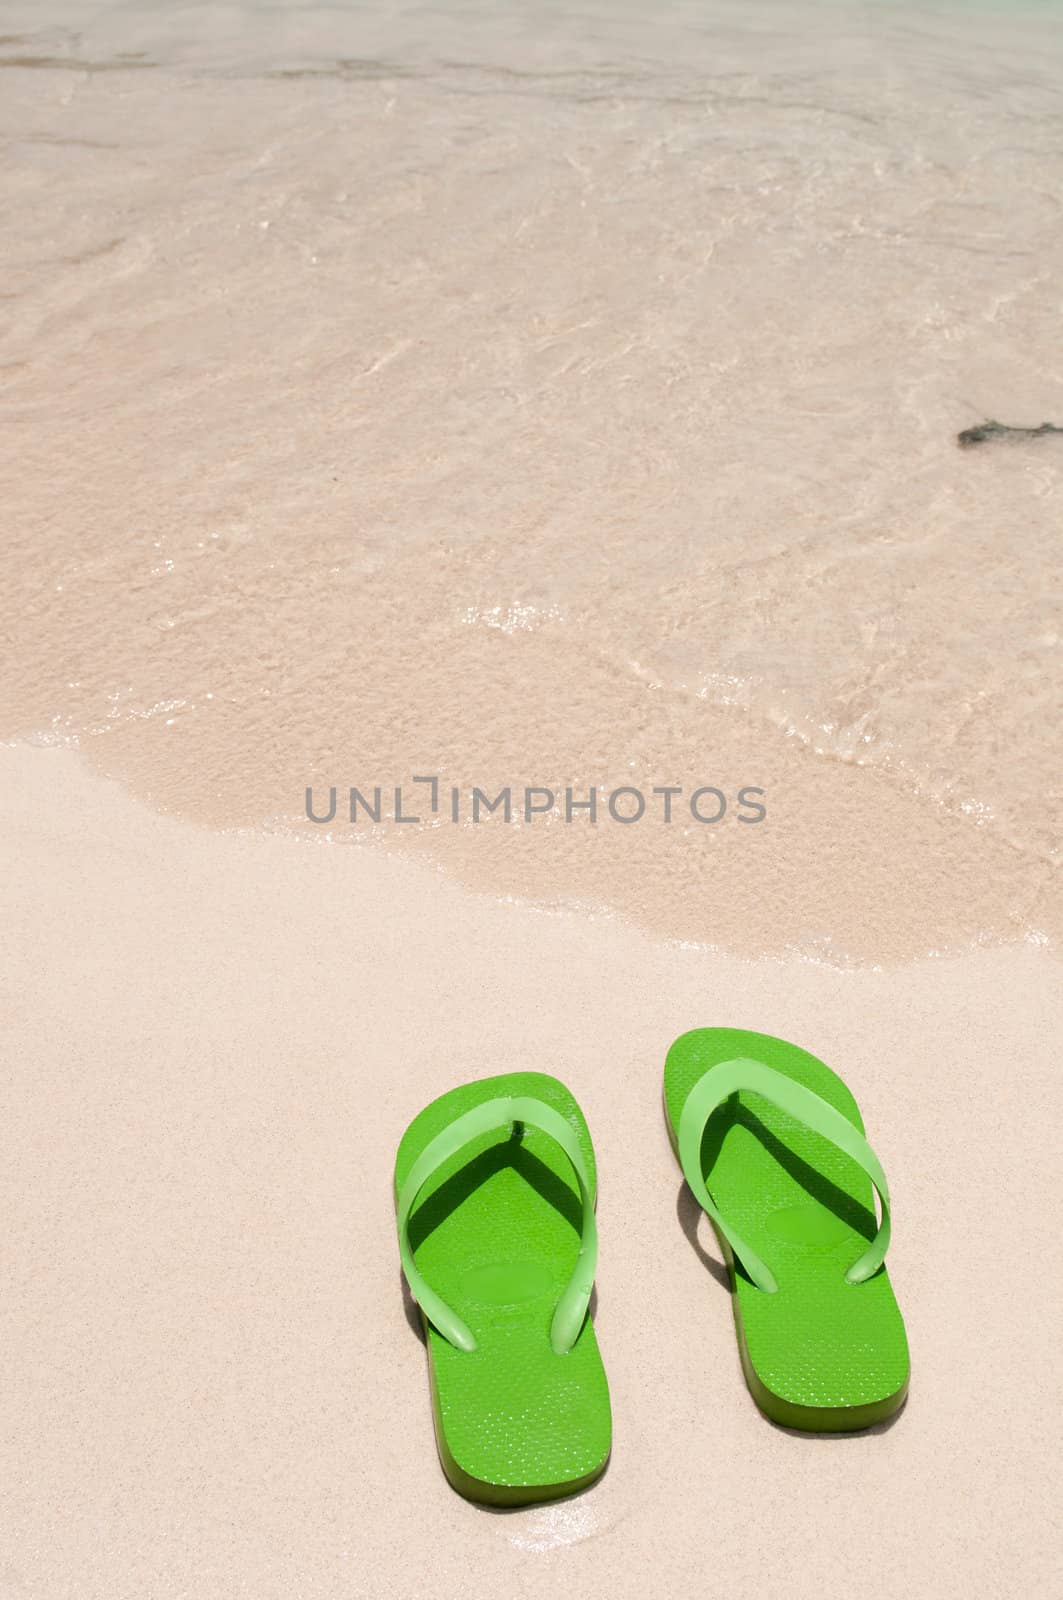 Flip flops on the beach by luissantos84